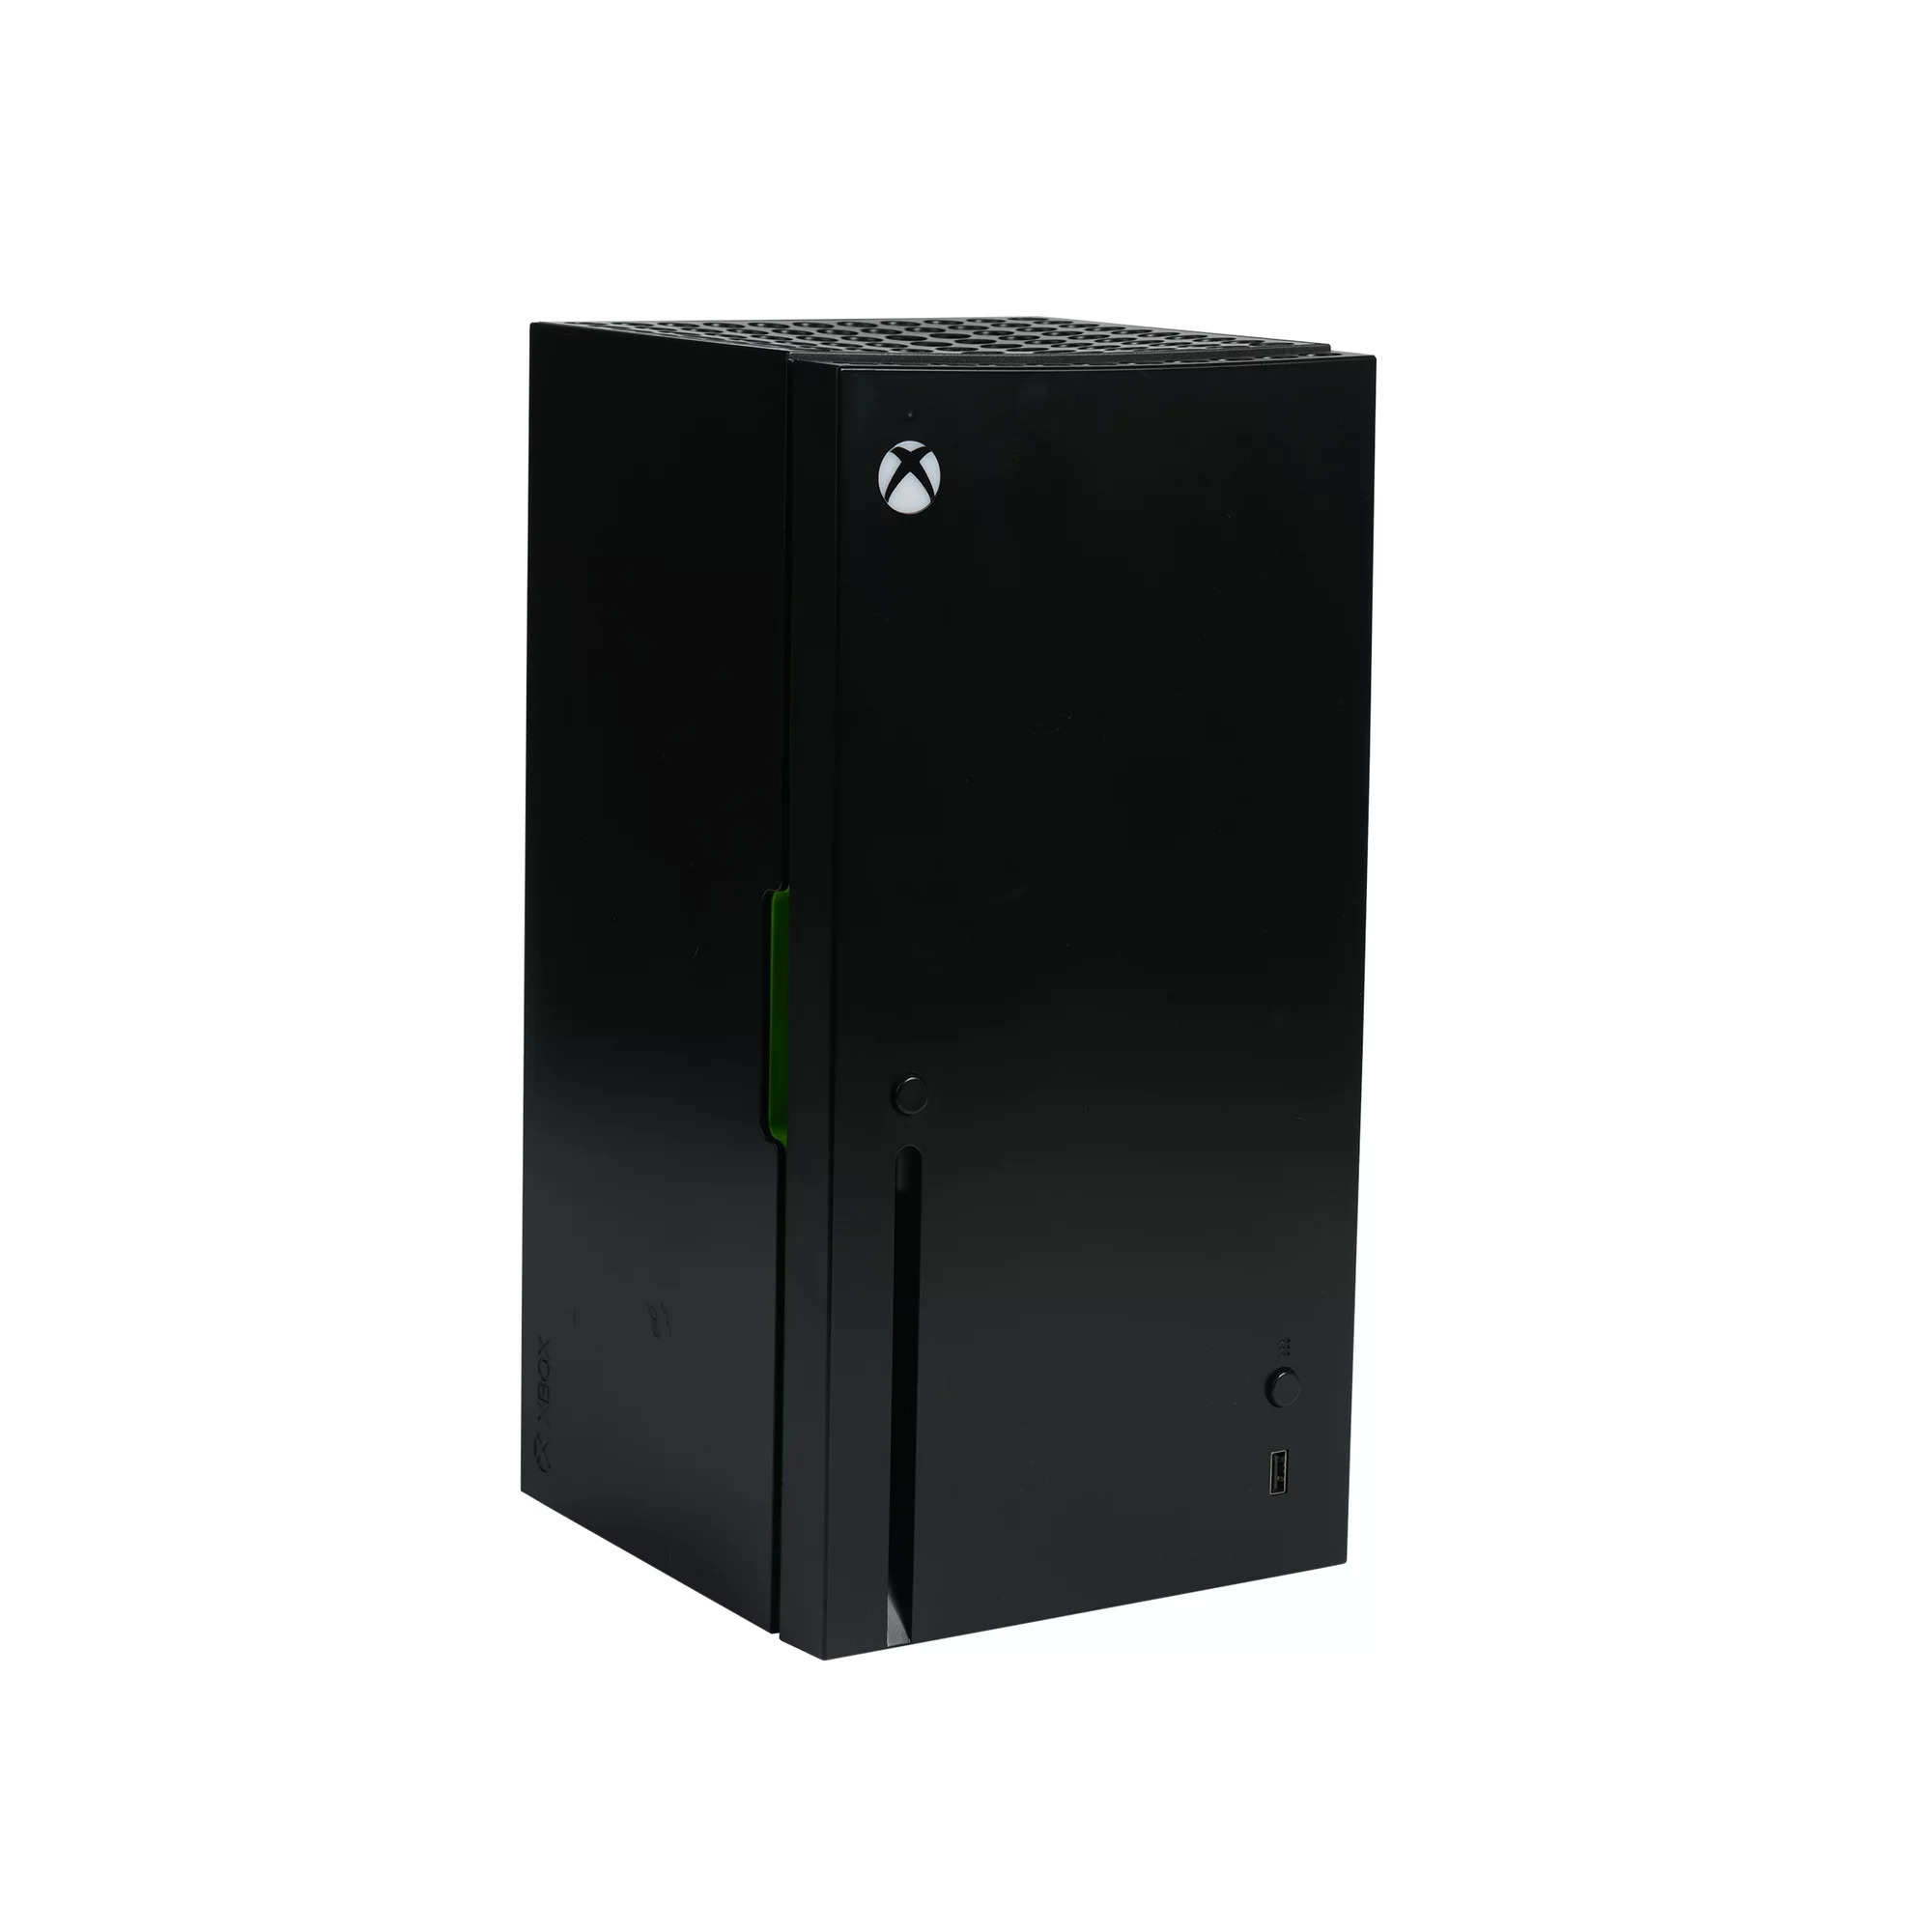 8-Can Xbox Series X Thermoelectric Cooler Replica Mini Fridge $36 + Free Shipping